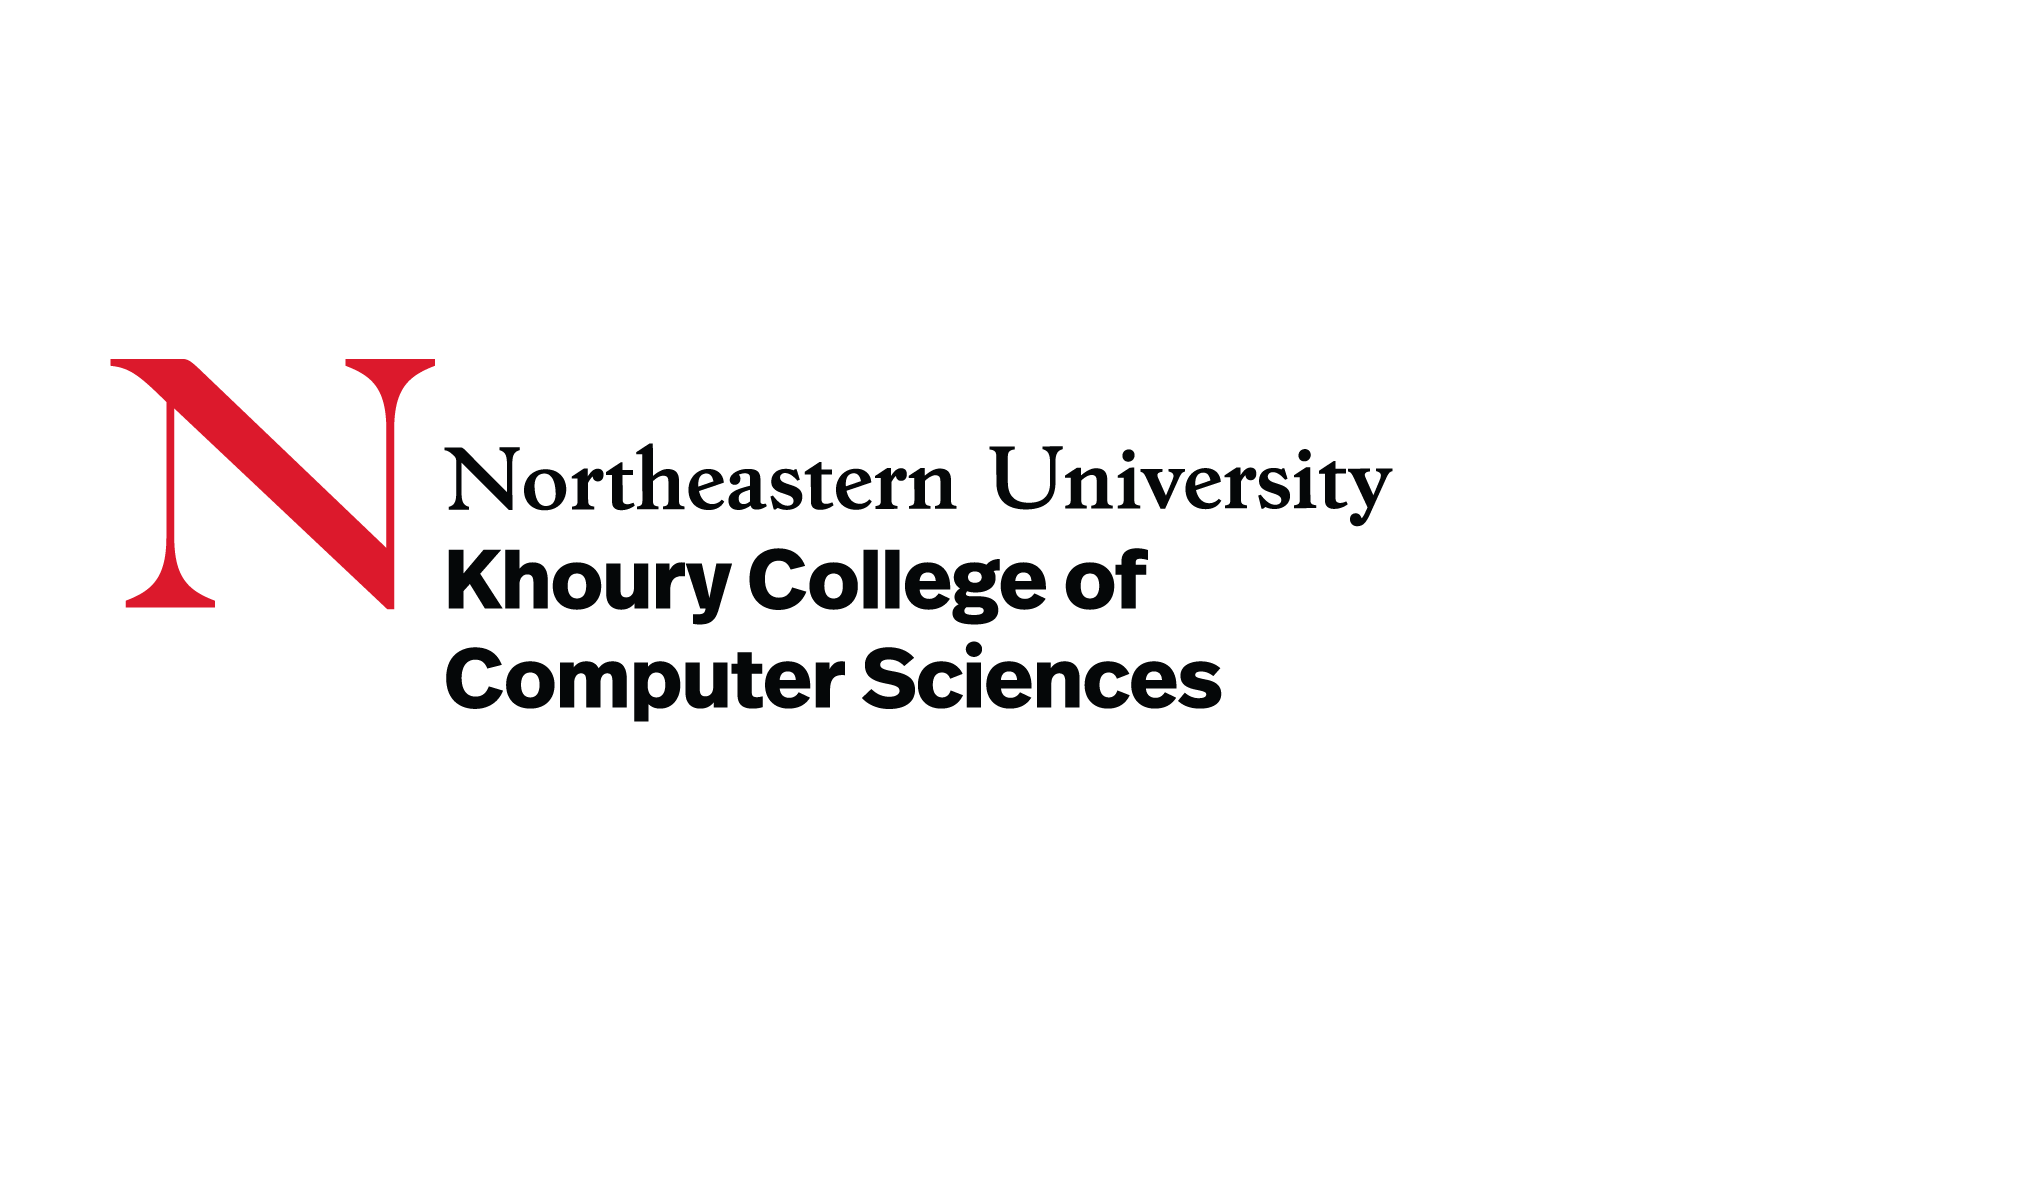 Northeastern University Khoury College of Computer Sciences